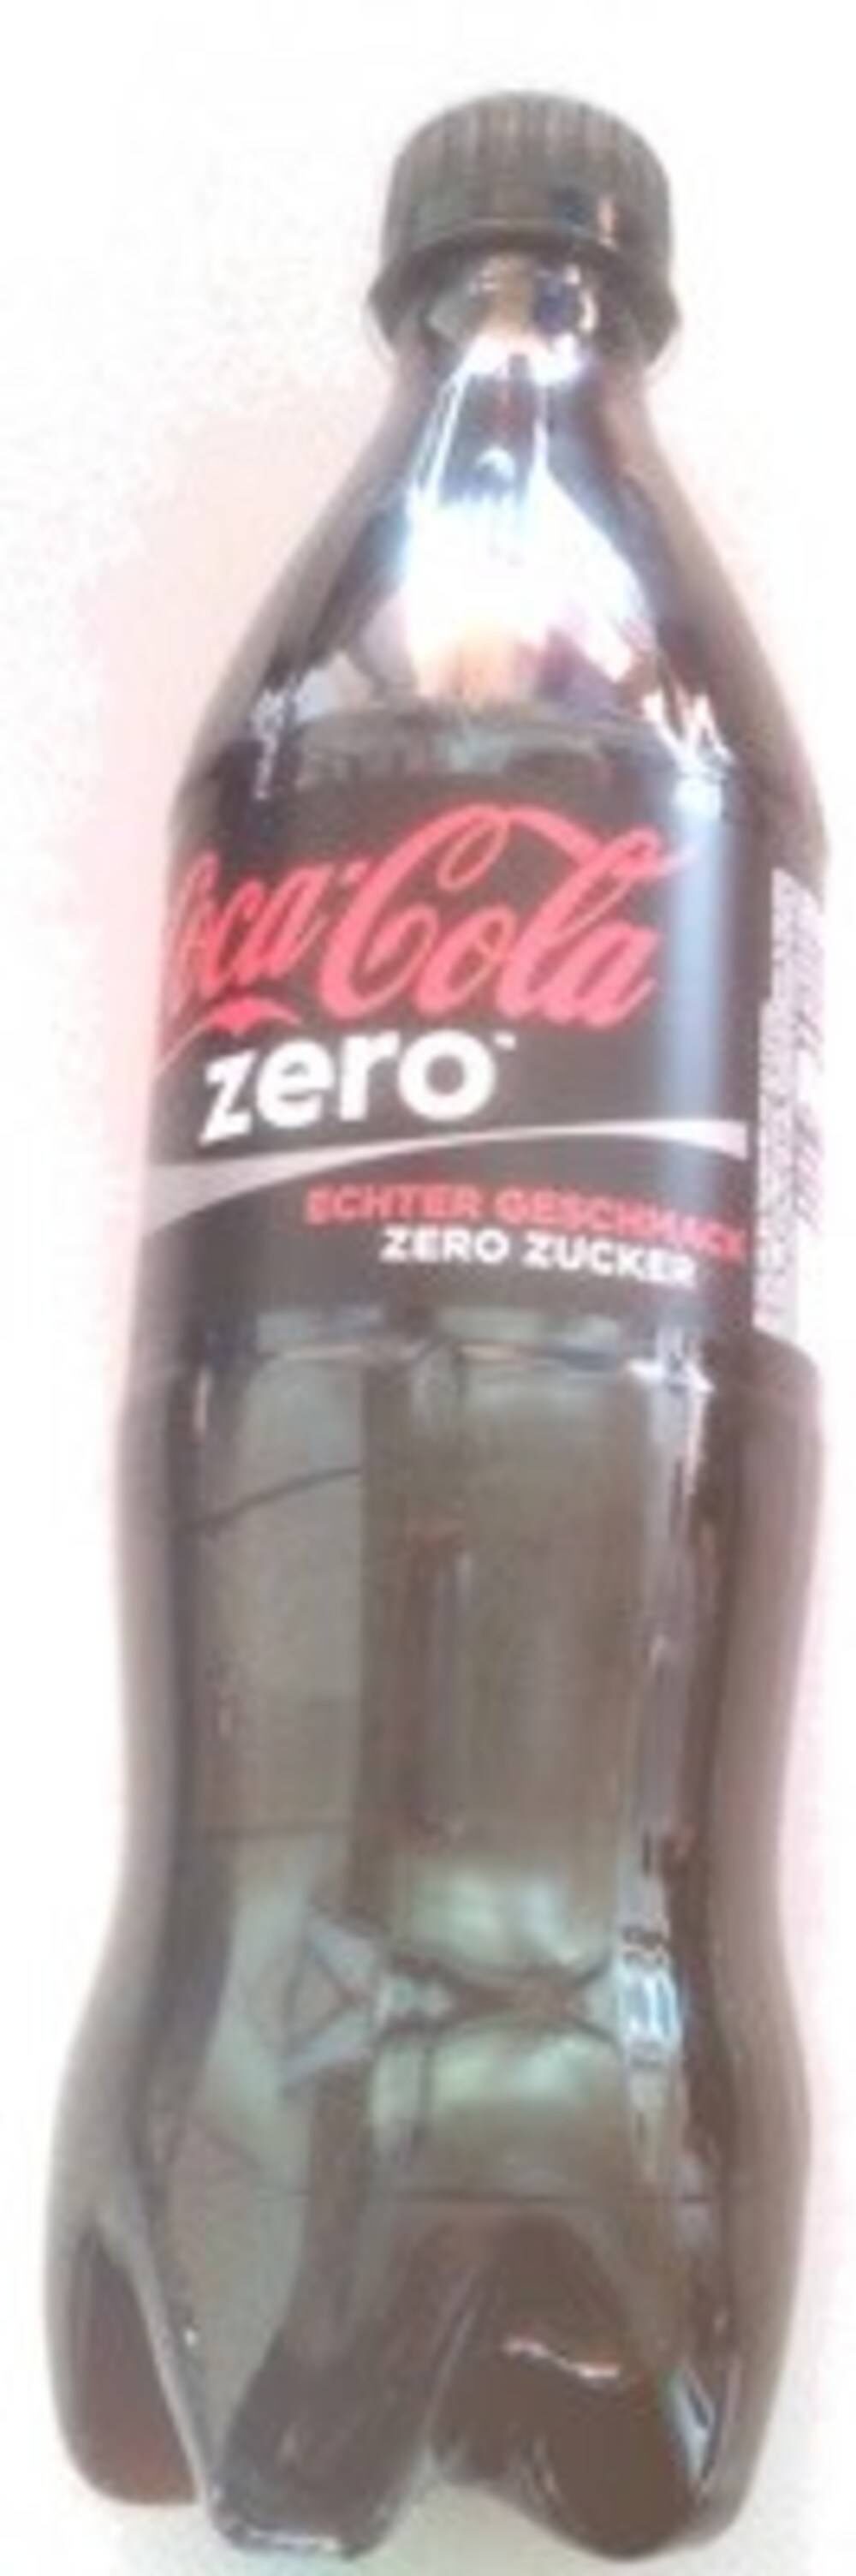 Coca-cola zéro - Product